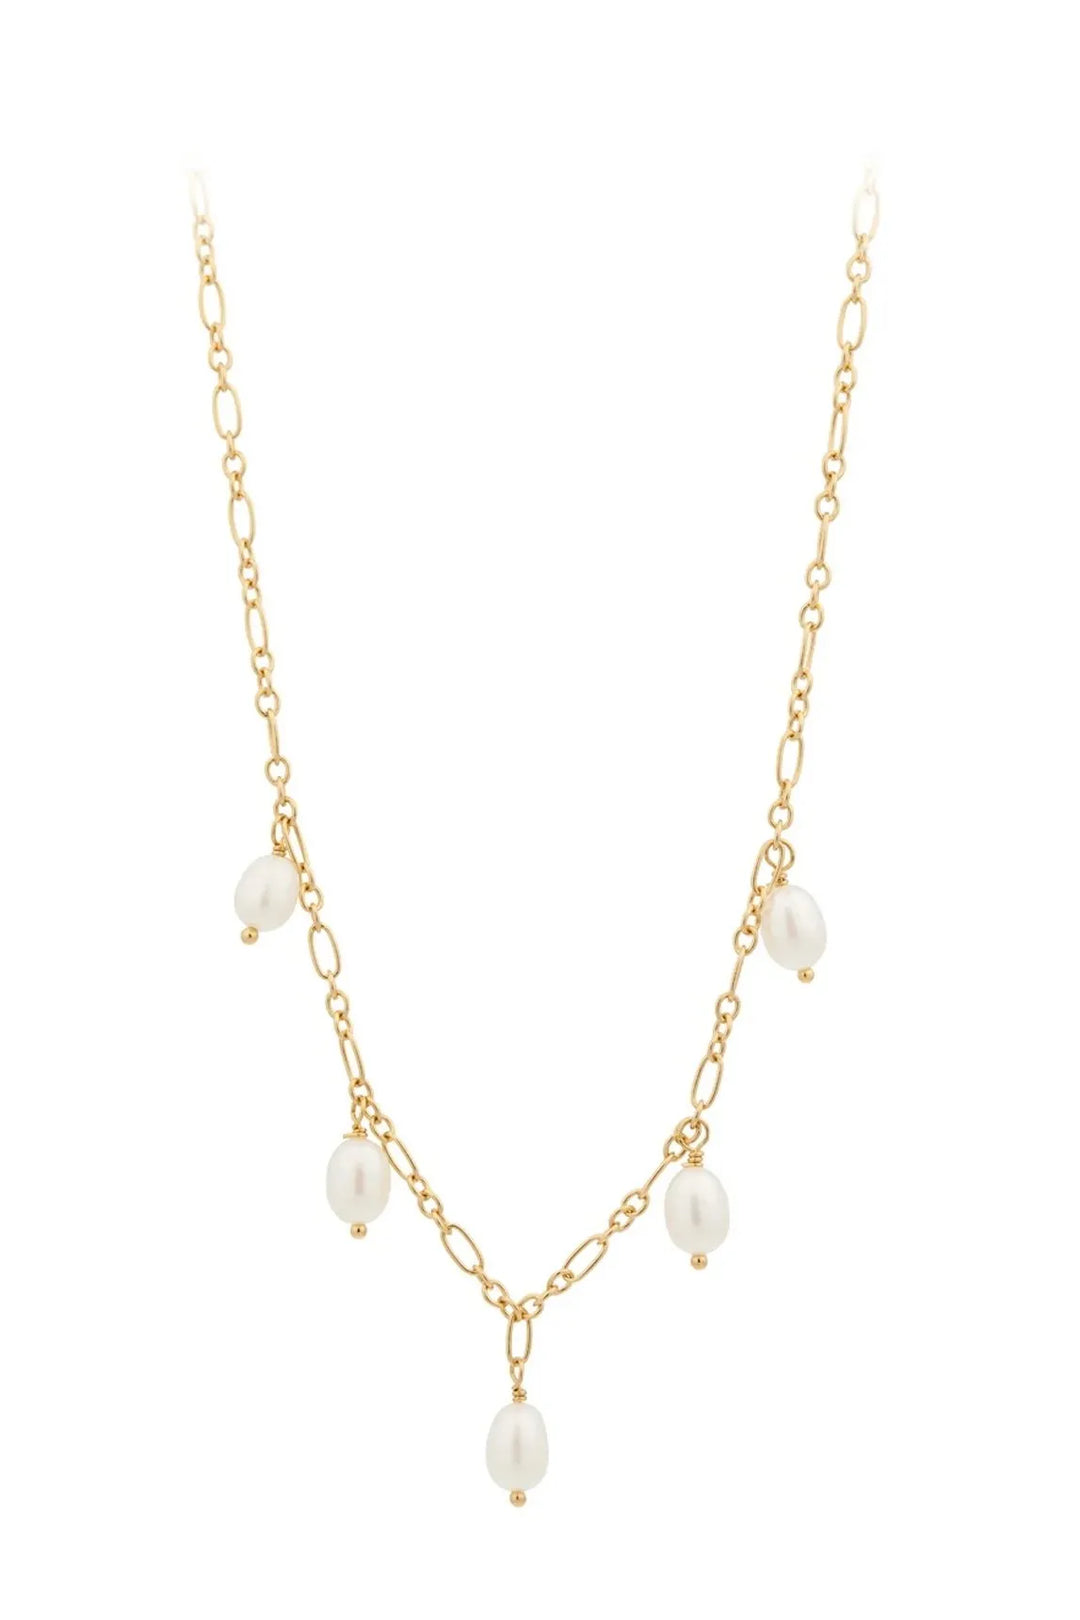 Halskæde | Pernille Corydon Ocean Dream necklace, forgyldt sølv